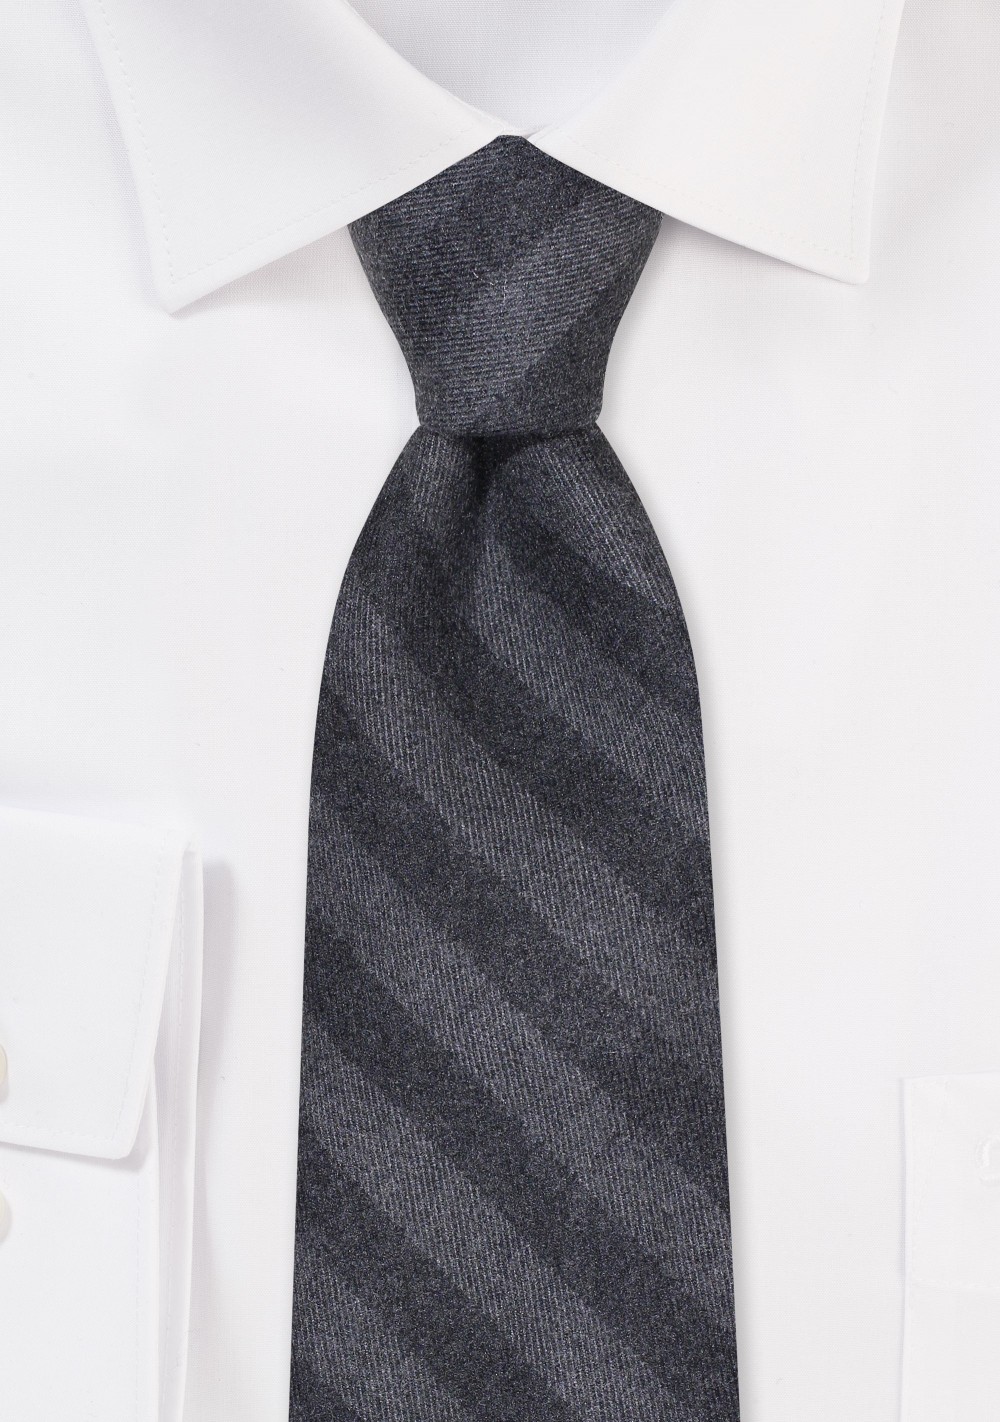 Cotton Striped Mens Tie in Dress Gray